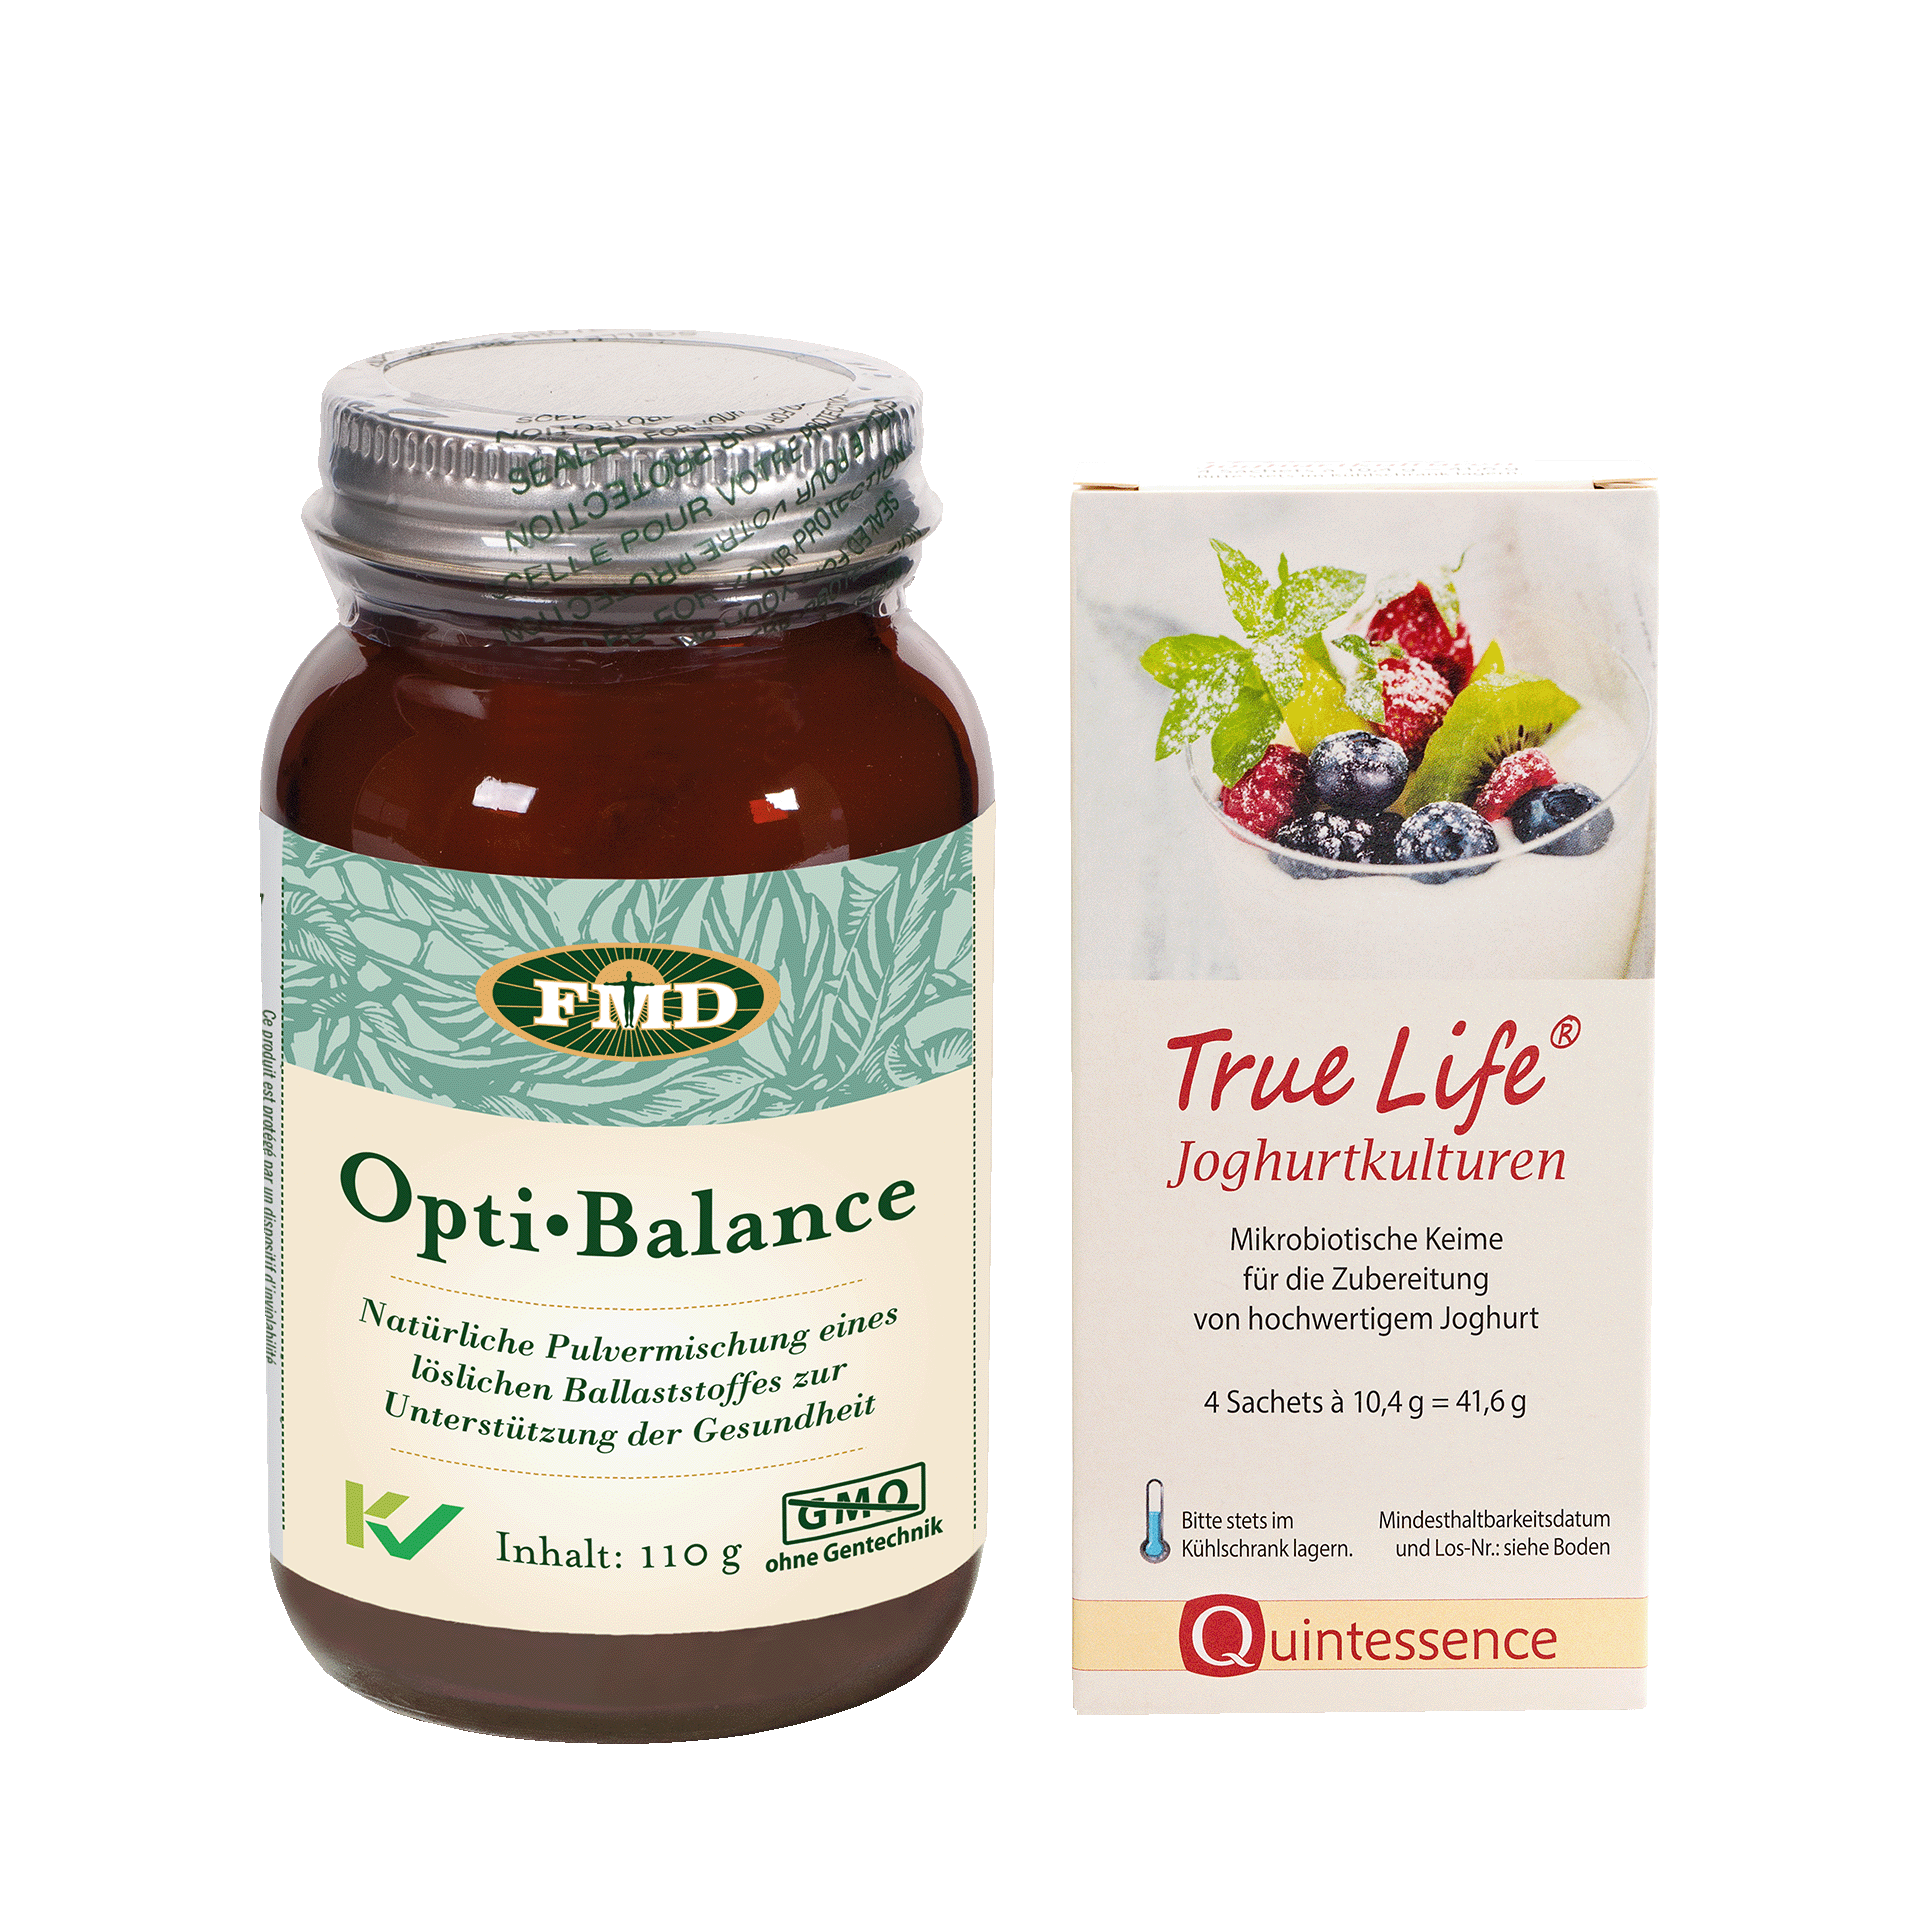 Aktionspaket True Life Joghurtkulturen, 4 Sachets à 10,4 g + Opti-Balance Pulver, 110 g